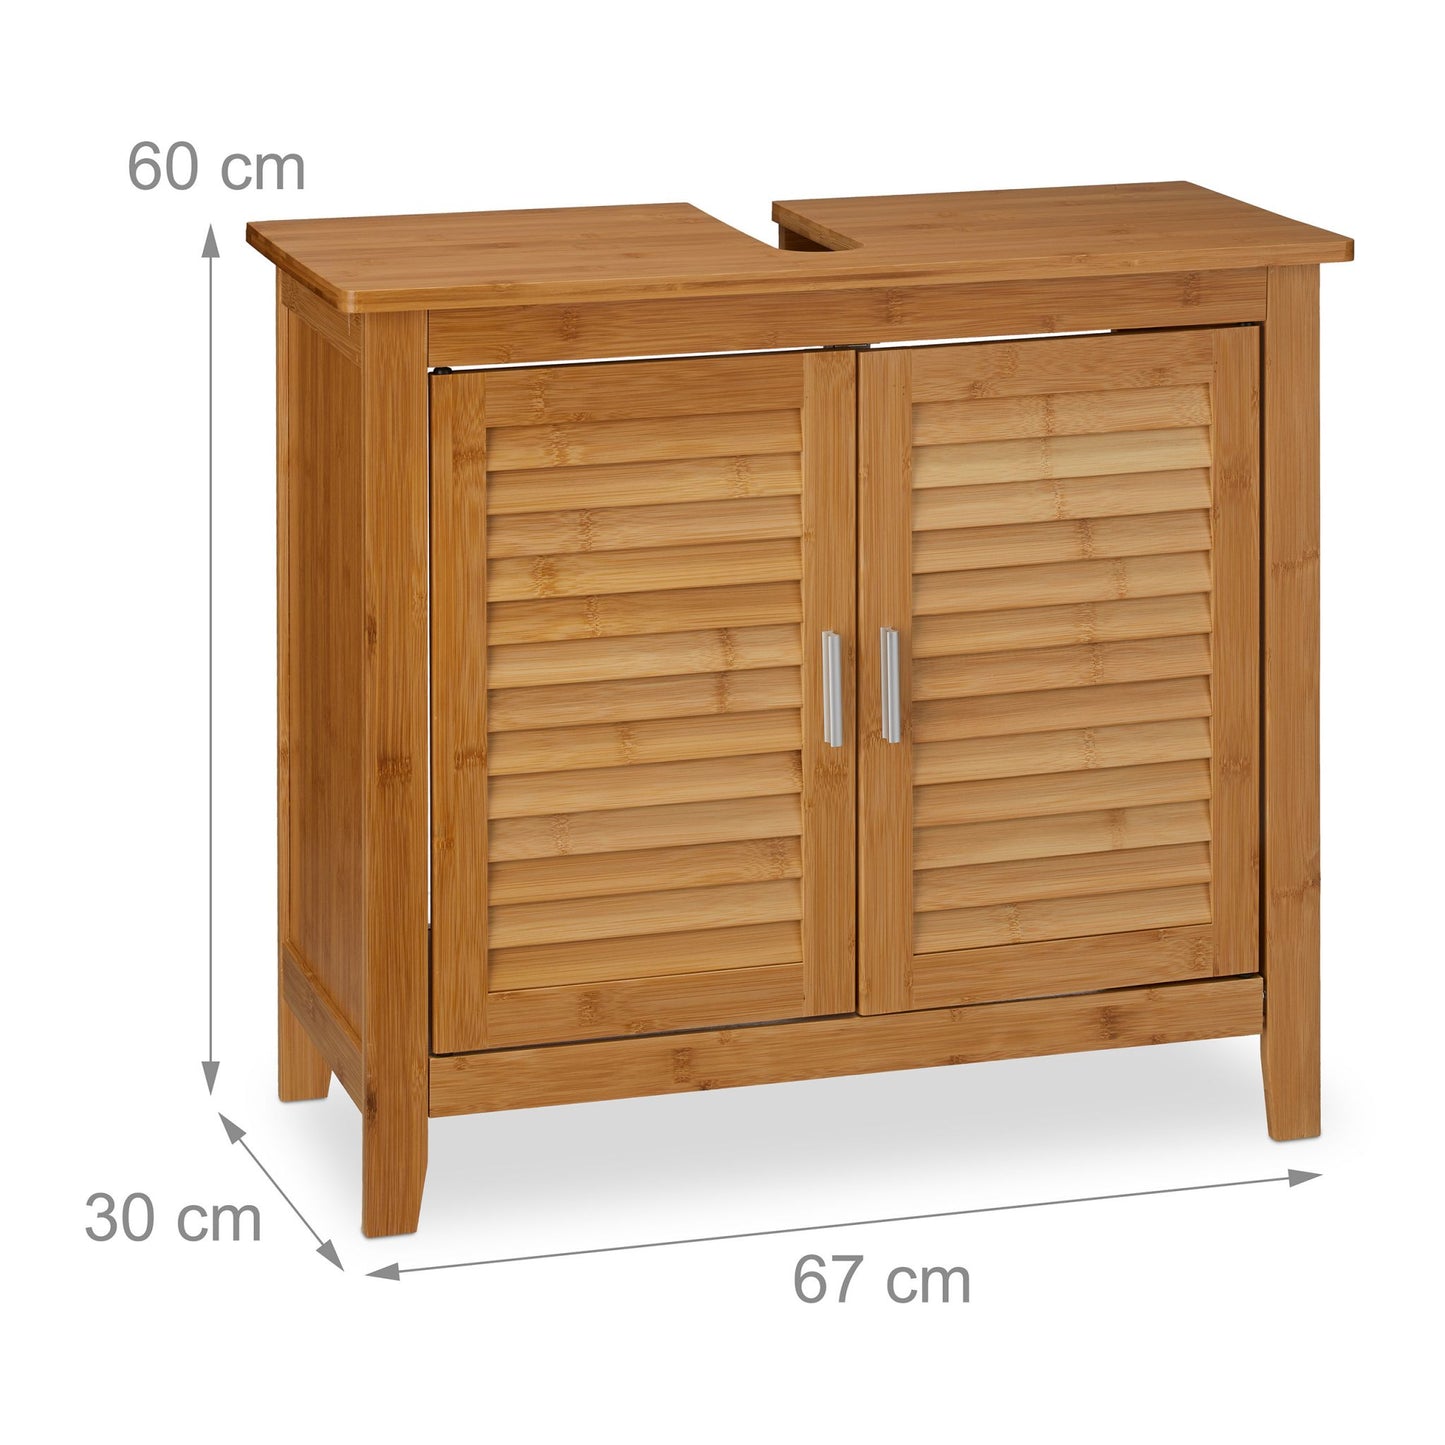 RelaxDays Basin Floor Cabinet LAMELL Bamboo Bamboo Bathrooms